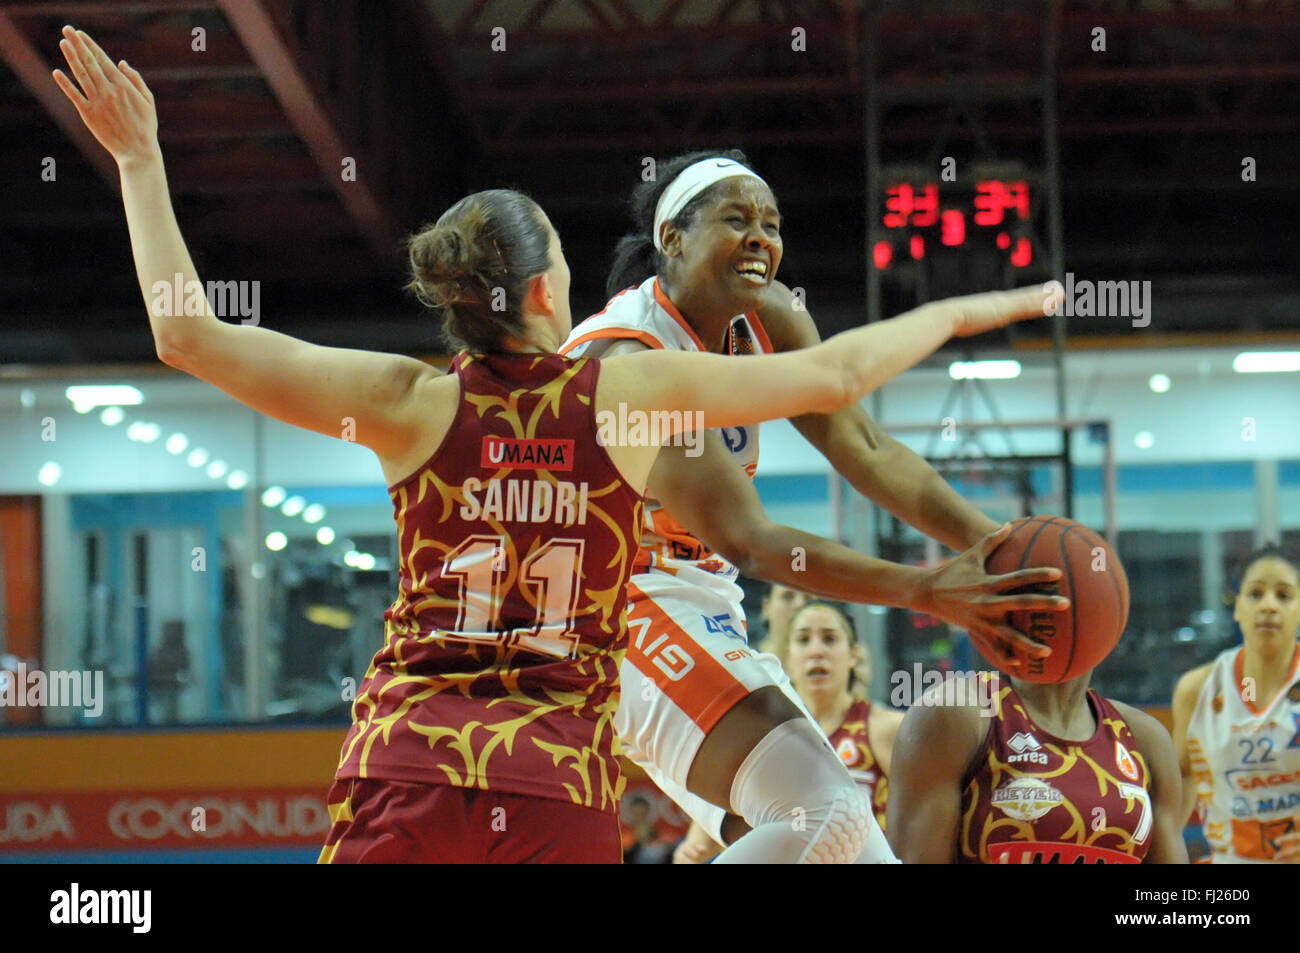 Lega basket femminile hi-res stock photography and images - Alamy